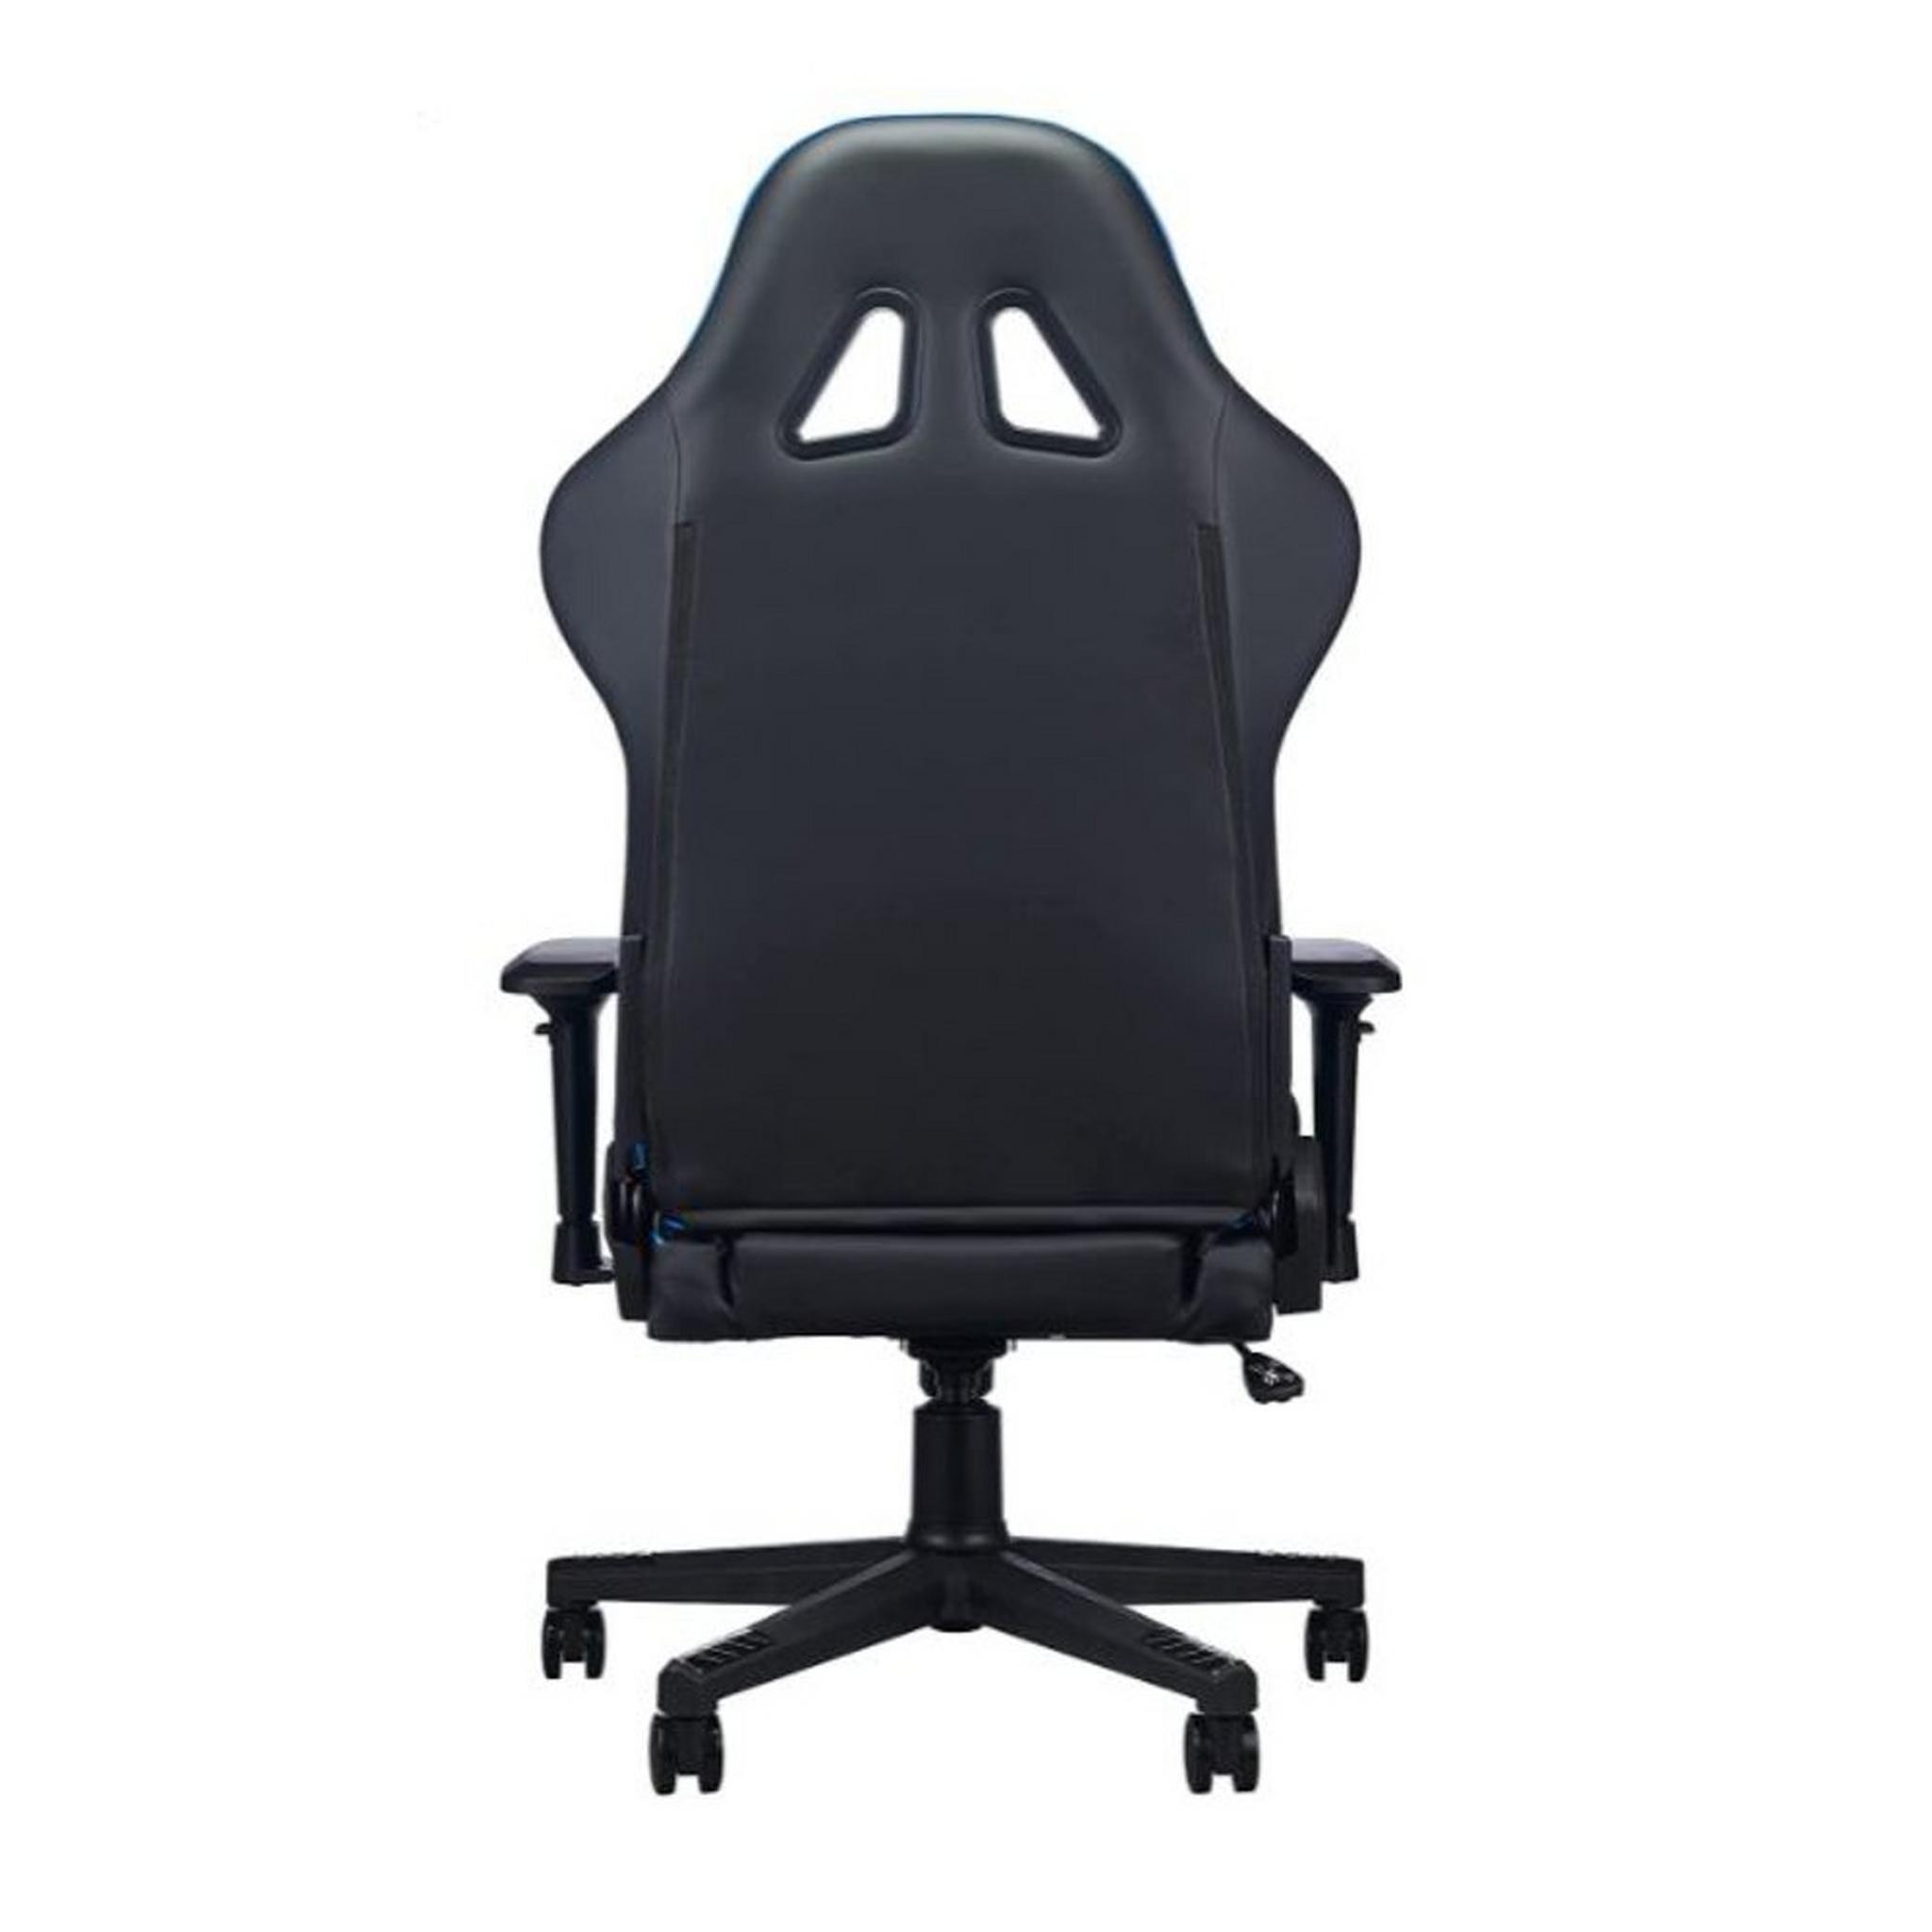 Predator Gaming Chair Lite (GP.GCR11.00C) Black and Blue